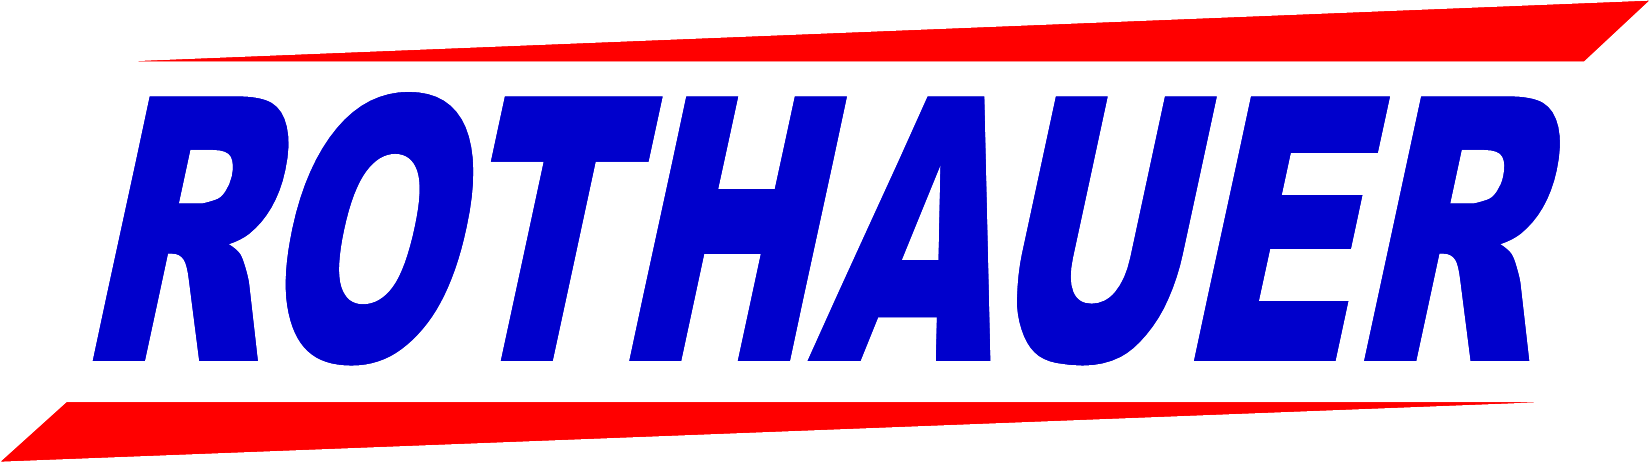 logo roth